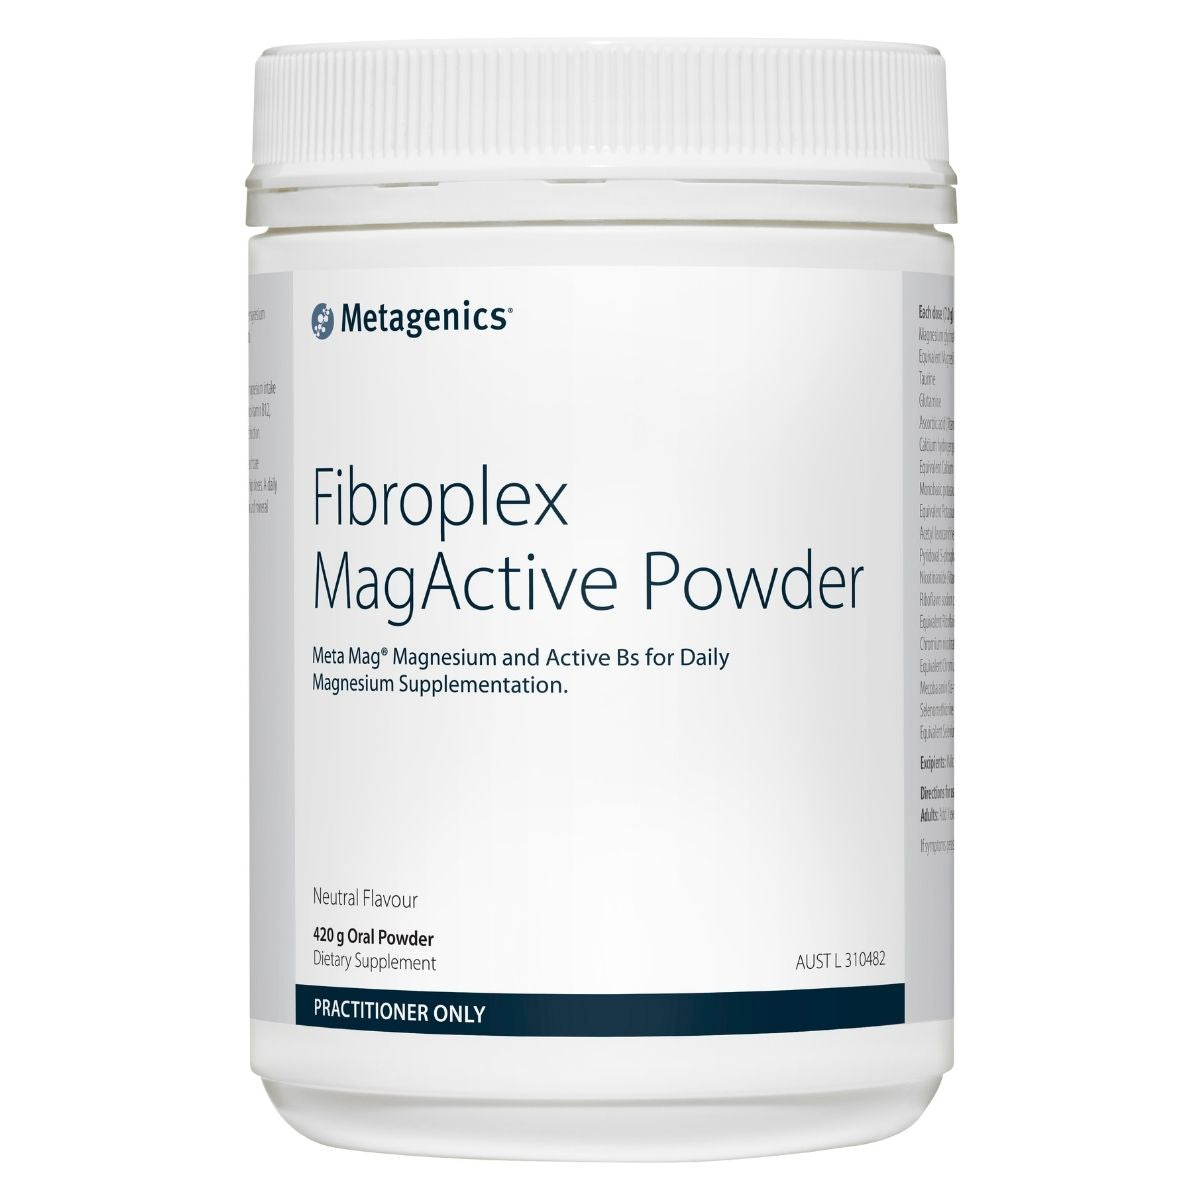 Metagenics Fibroplex MagActive Powder Neutral 420g | Vitality and Wellness Centre